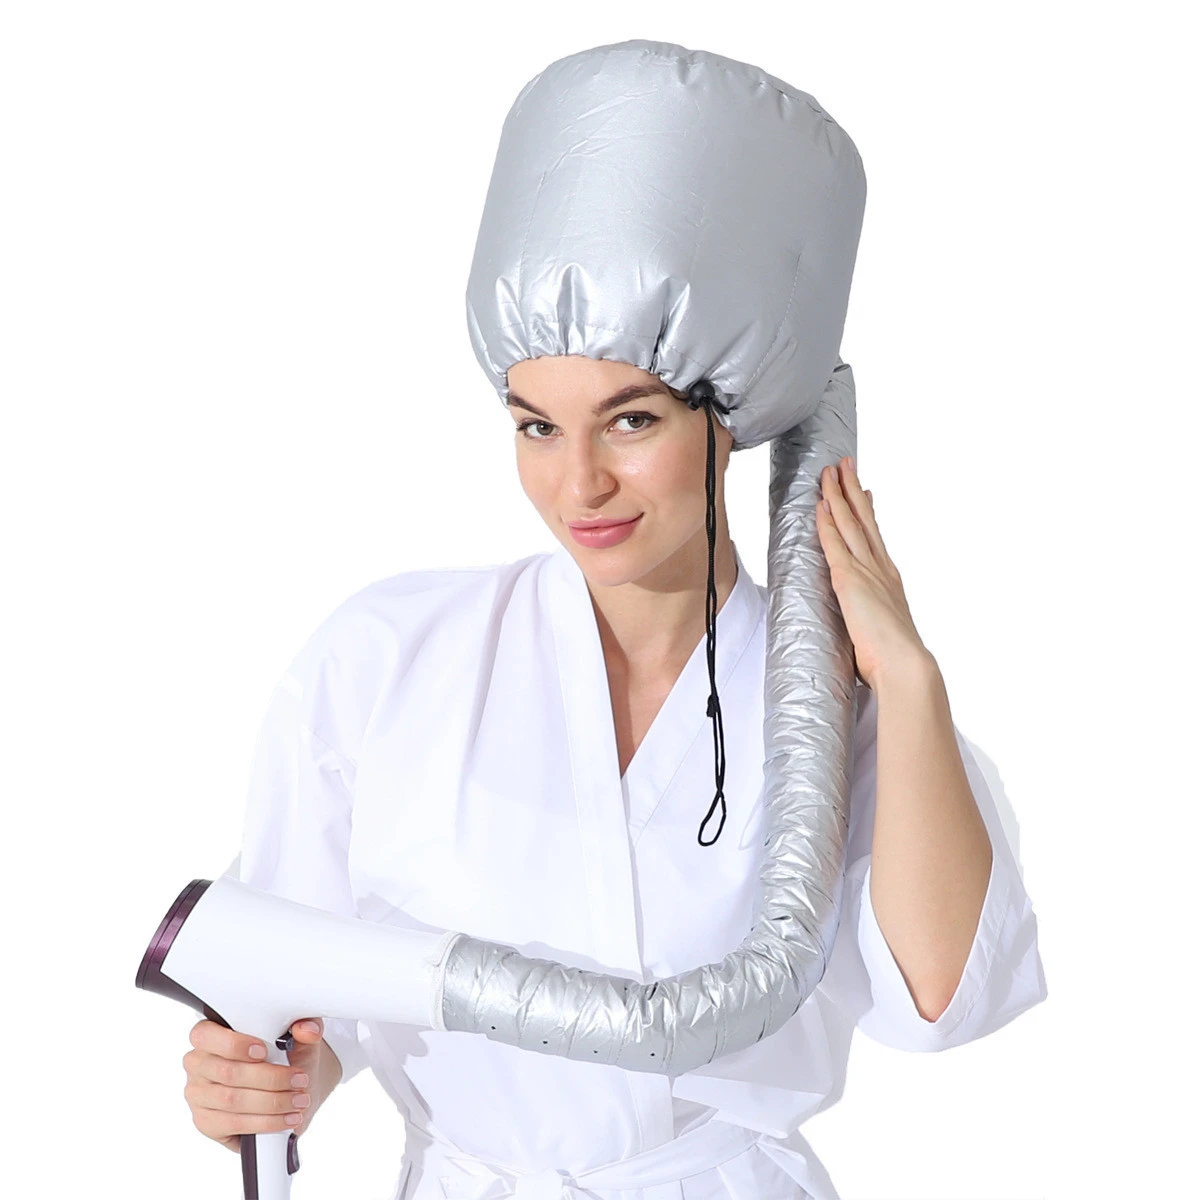 2021 hot selling New Portable Soft Hair-Drying Cap bonnet hair dryer hat